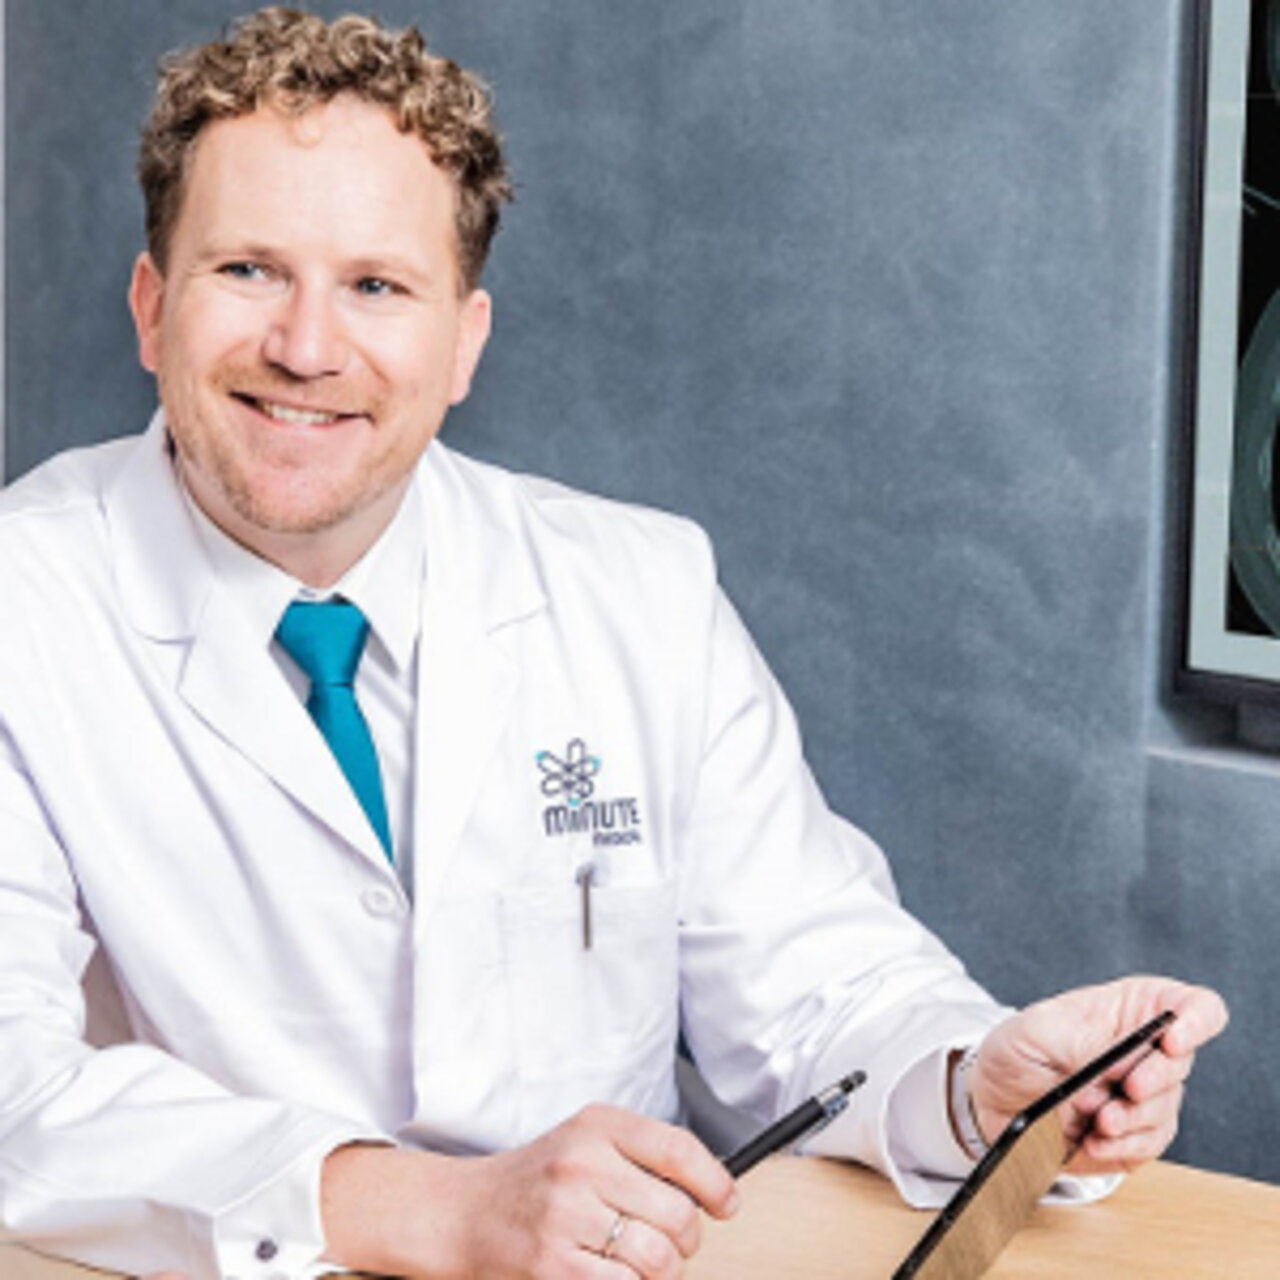 MINUTE medical – Prof. Dr. Markus Hartenbach - Portrait